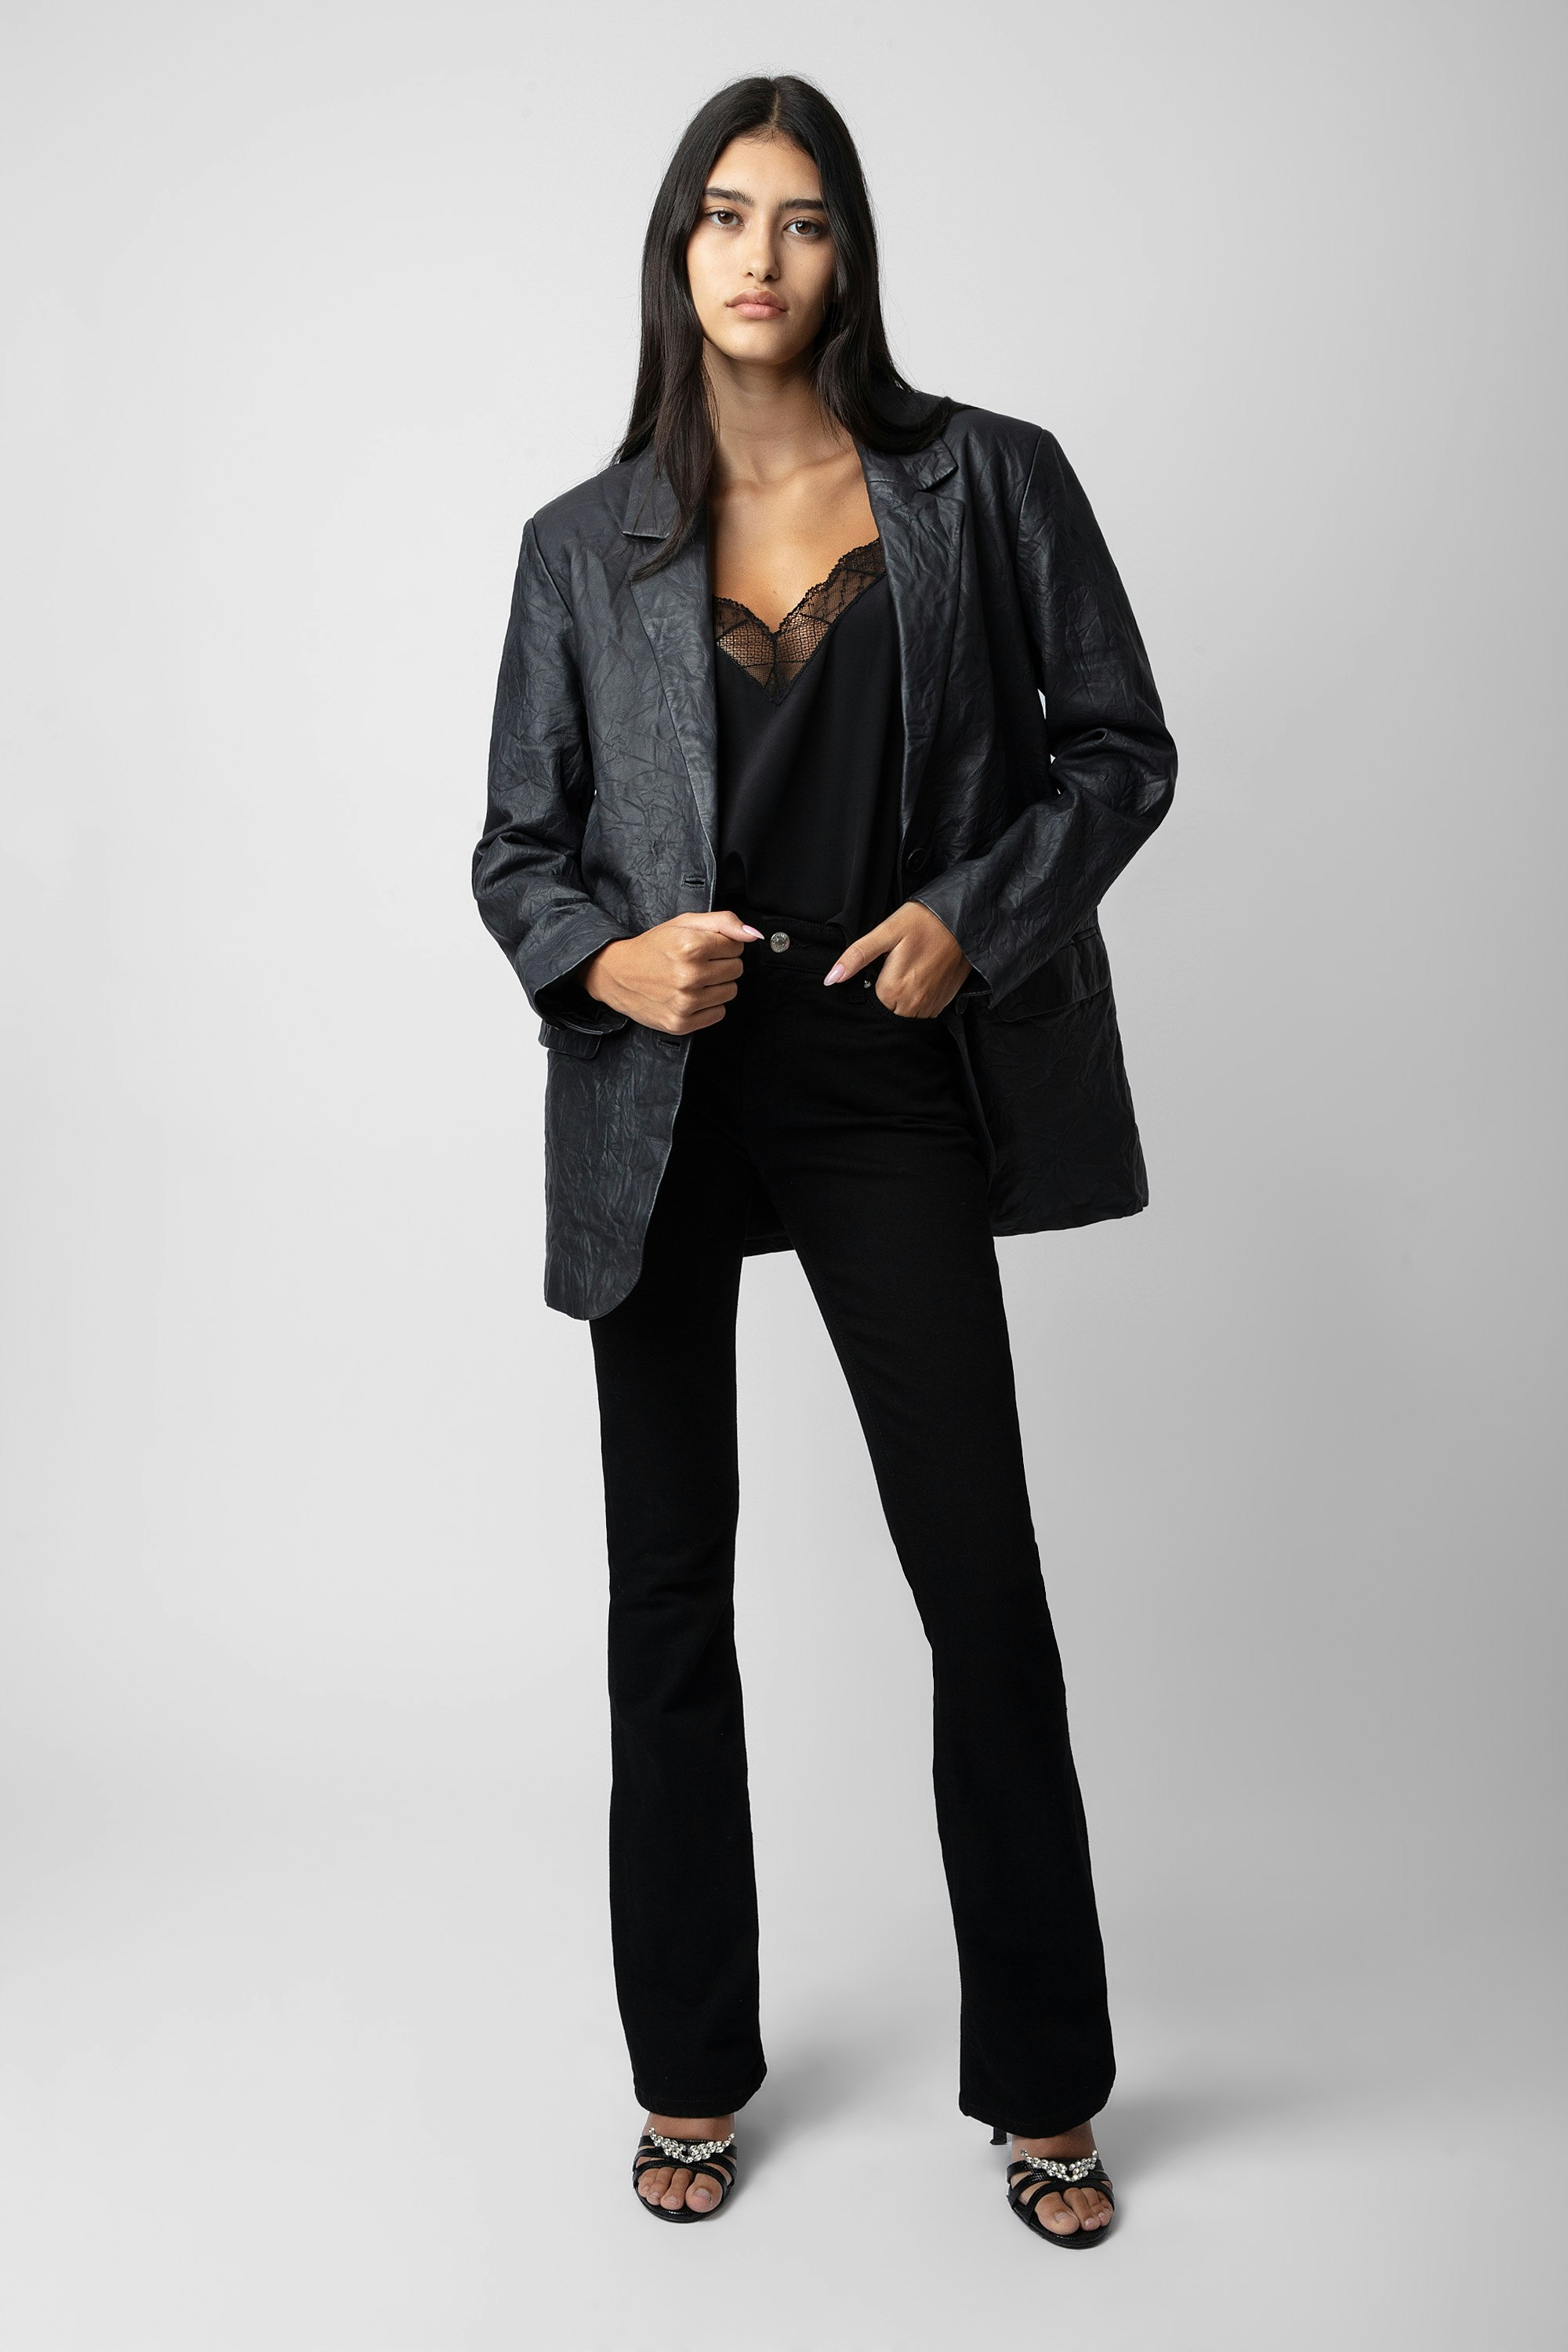 Venturi Crinkled Leather Blazer - Women’s anthracite crinkled leather blazer.